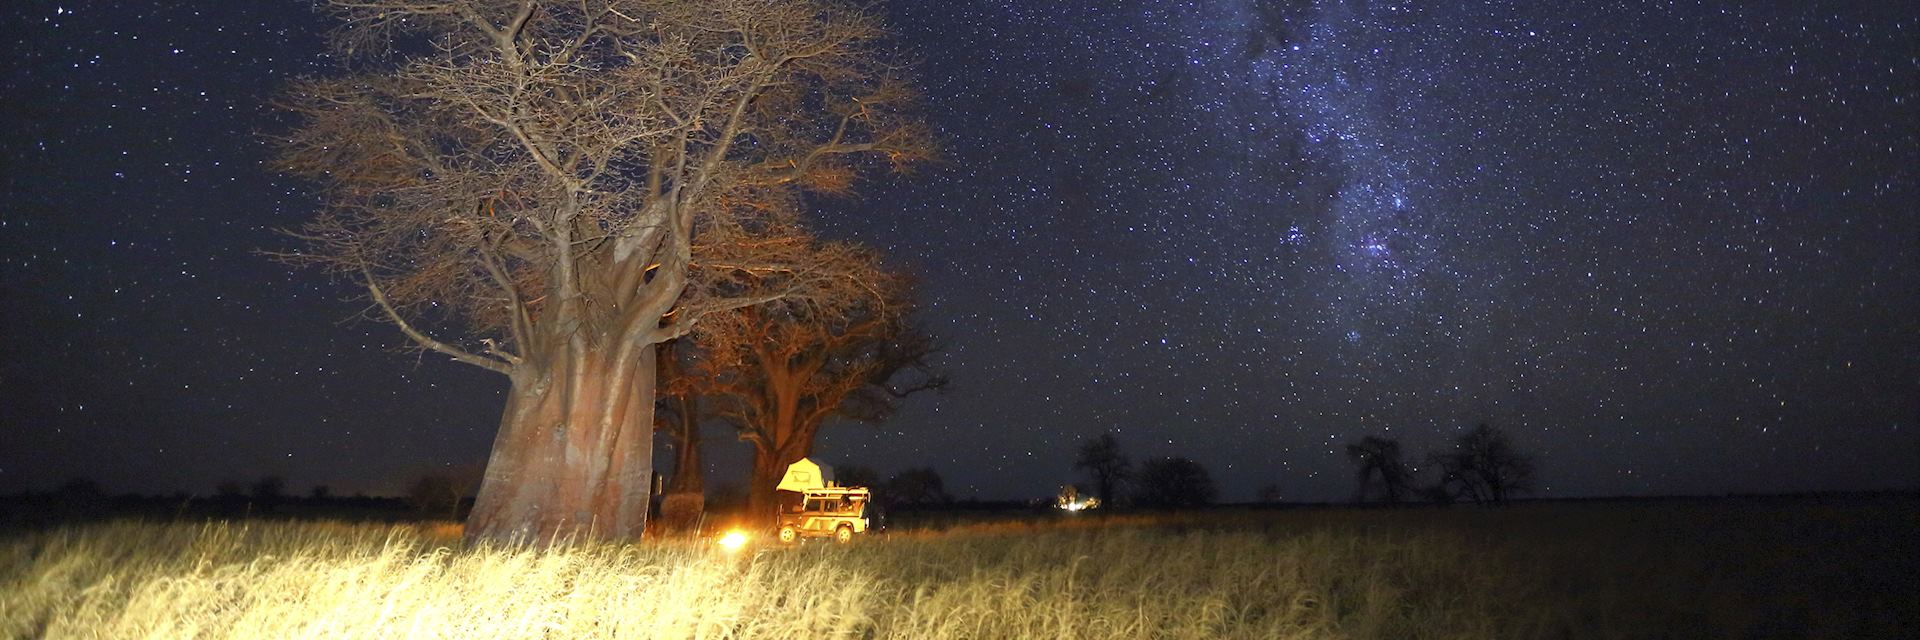 Mobile camping in Botswana